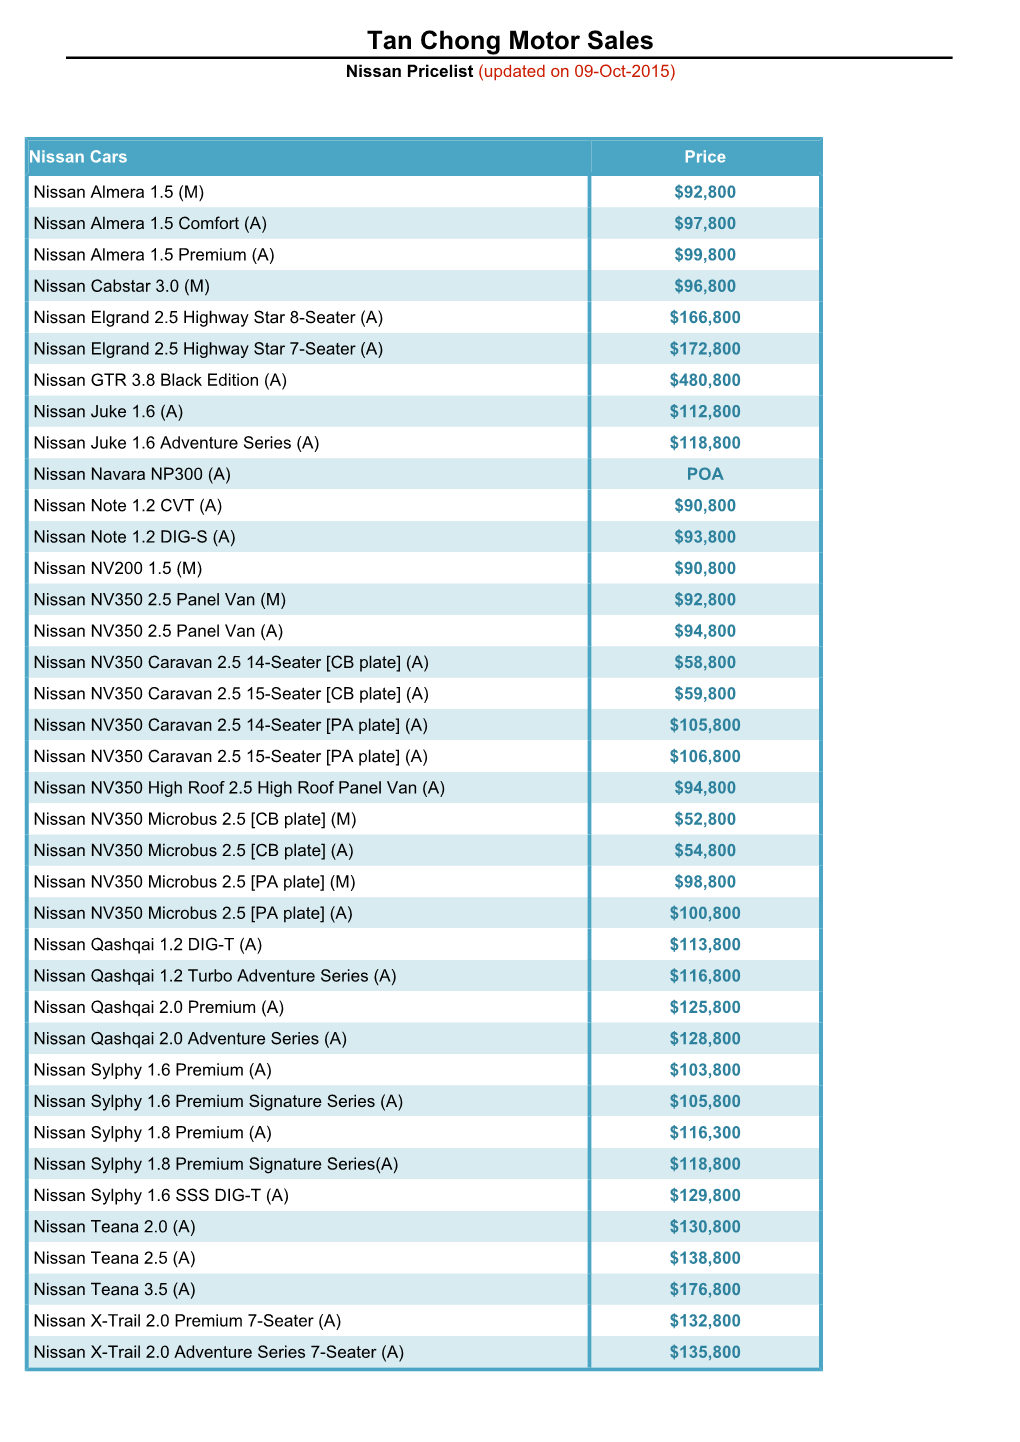 Tan Chong Motor Sales Nissan Pricelist (Updated on 09-Oct-2015)